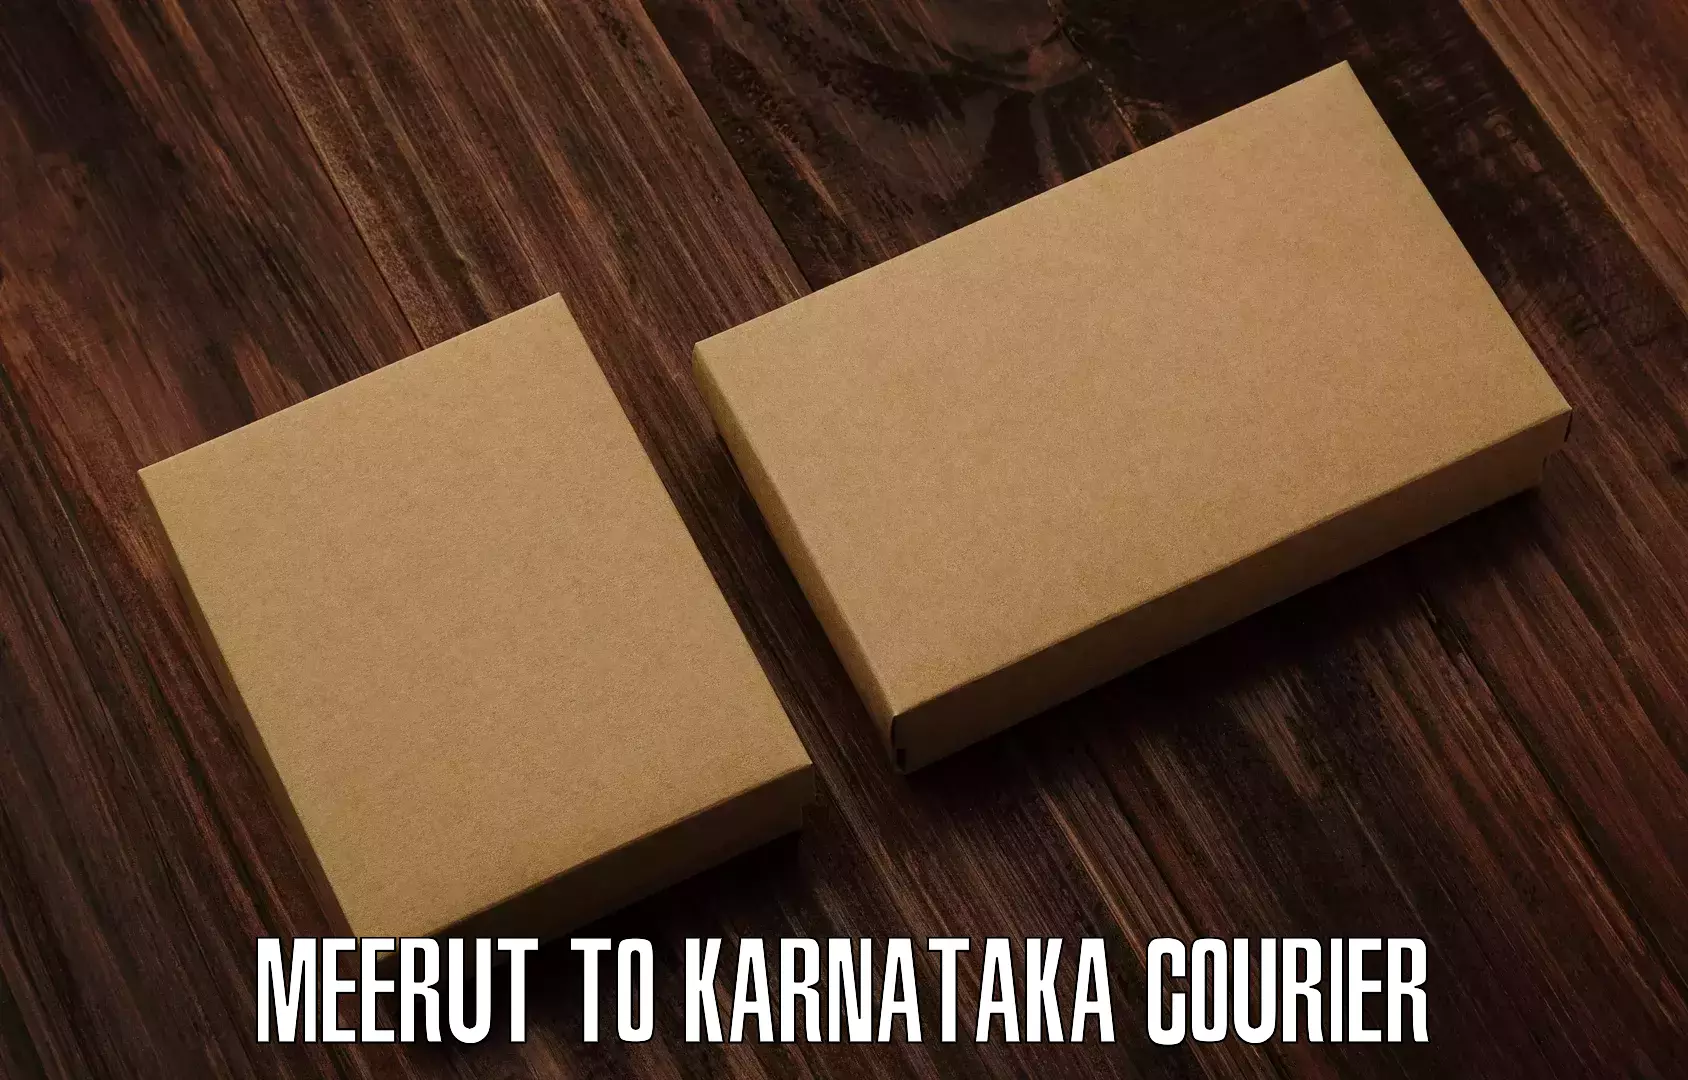 Courier membership Meerut to Karnataka